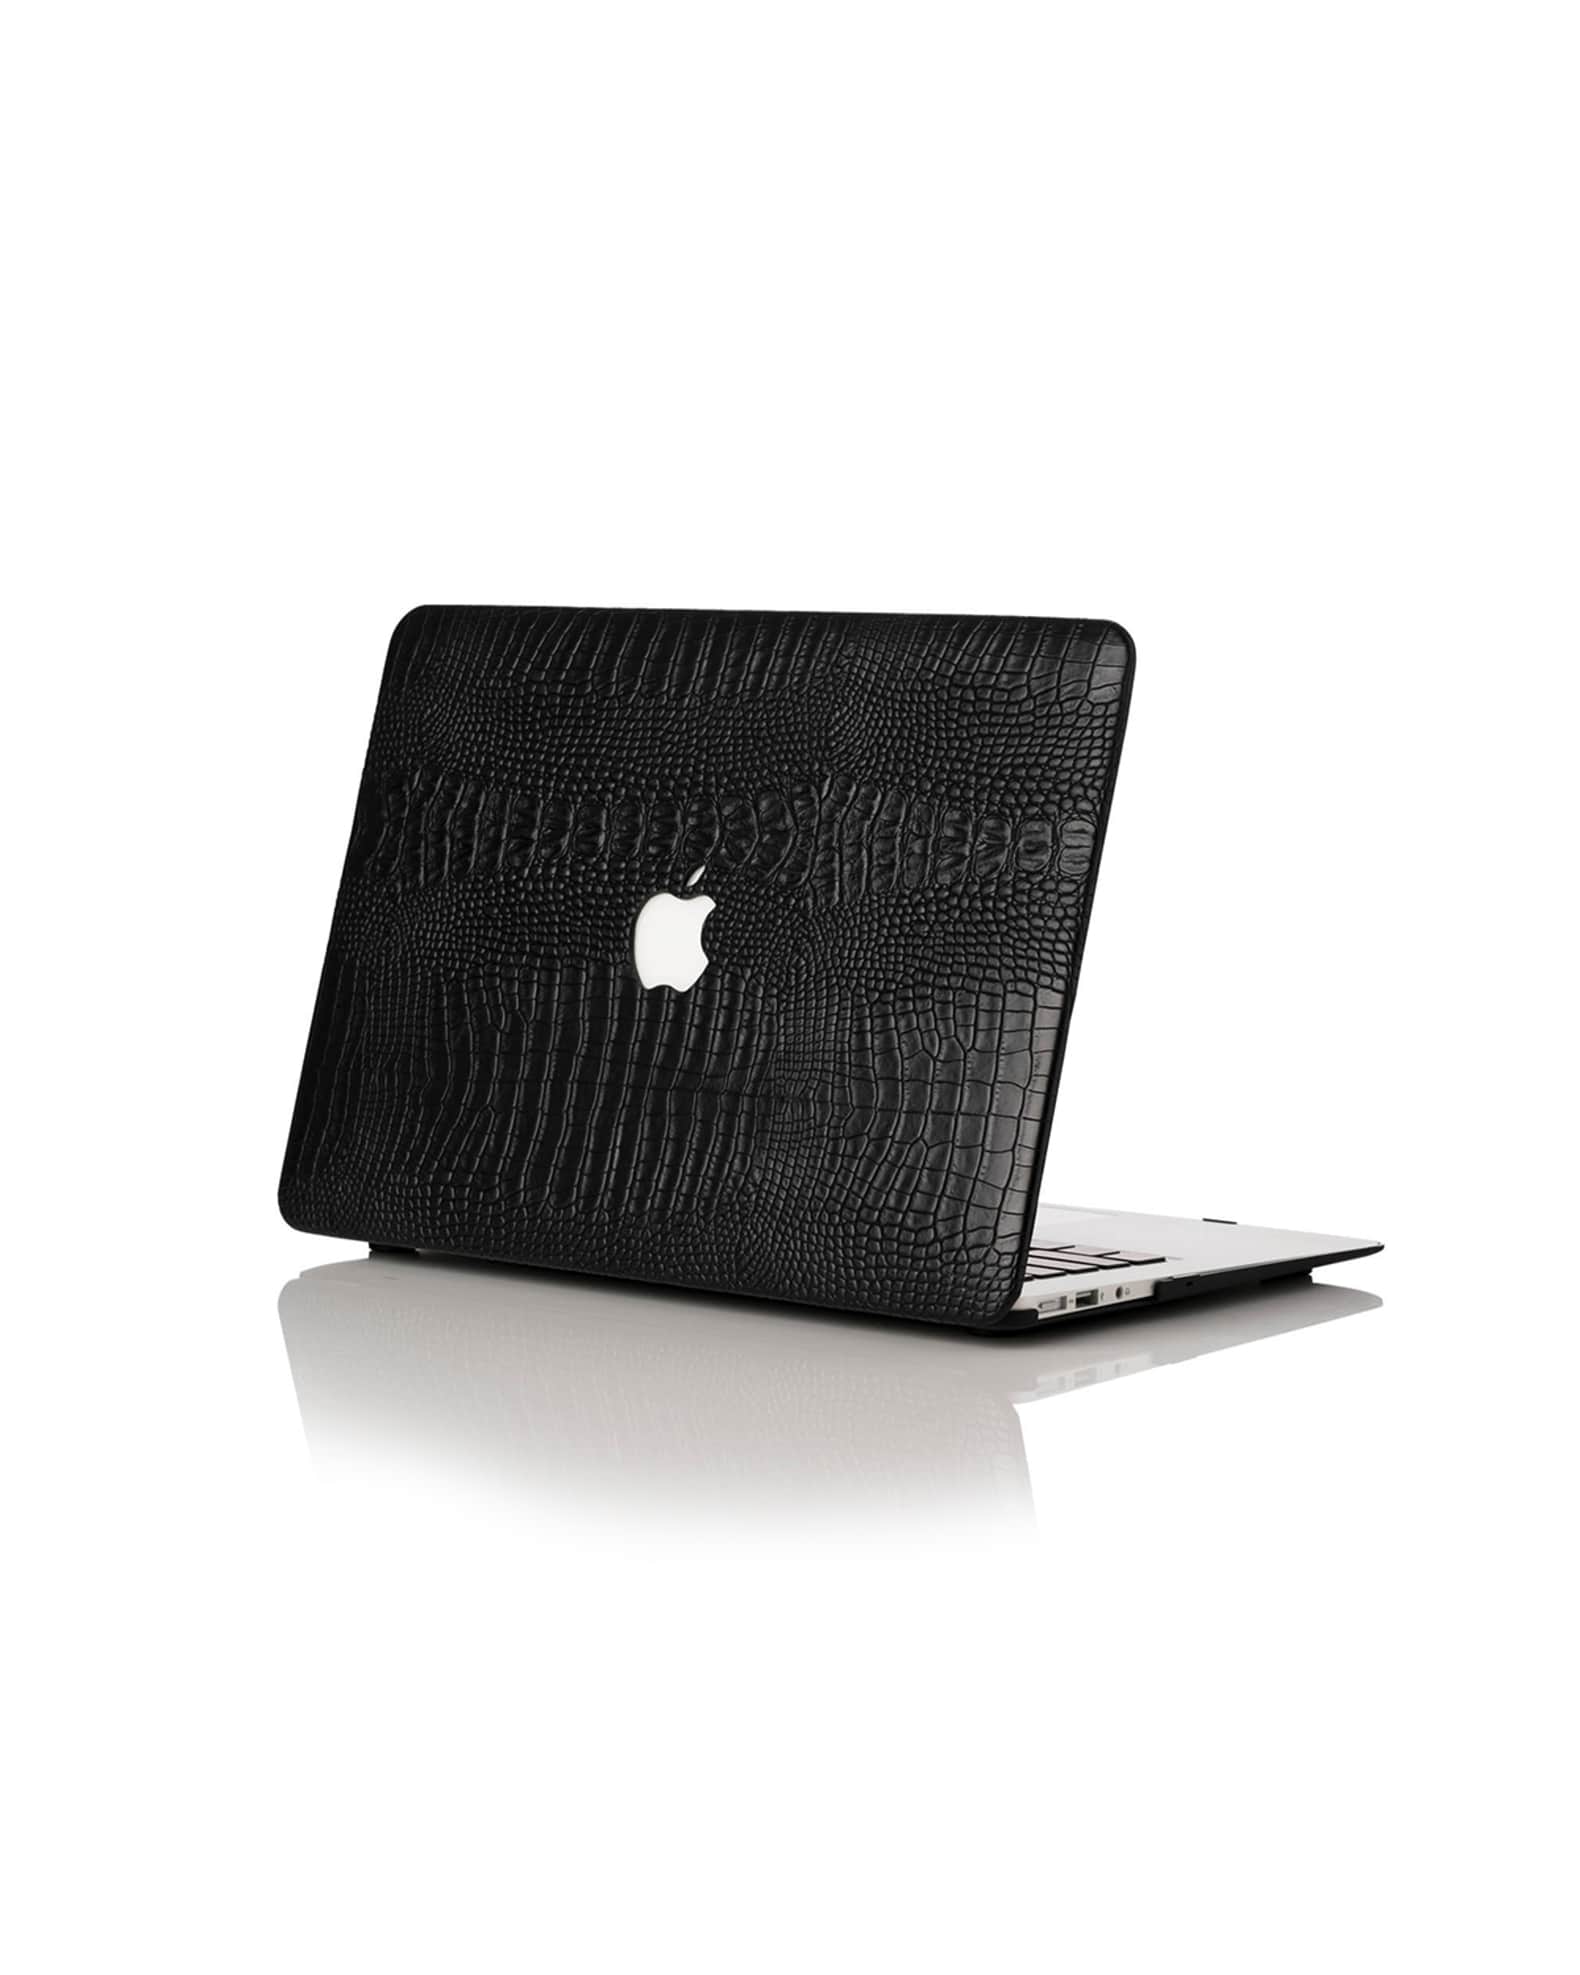 chanel macbook air 13 inch case